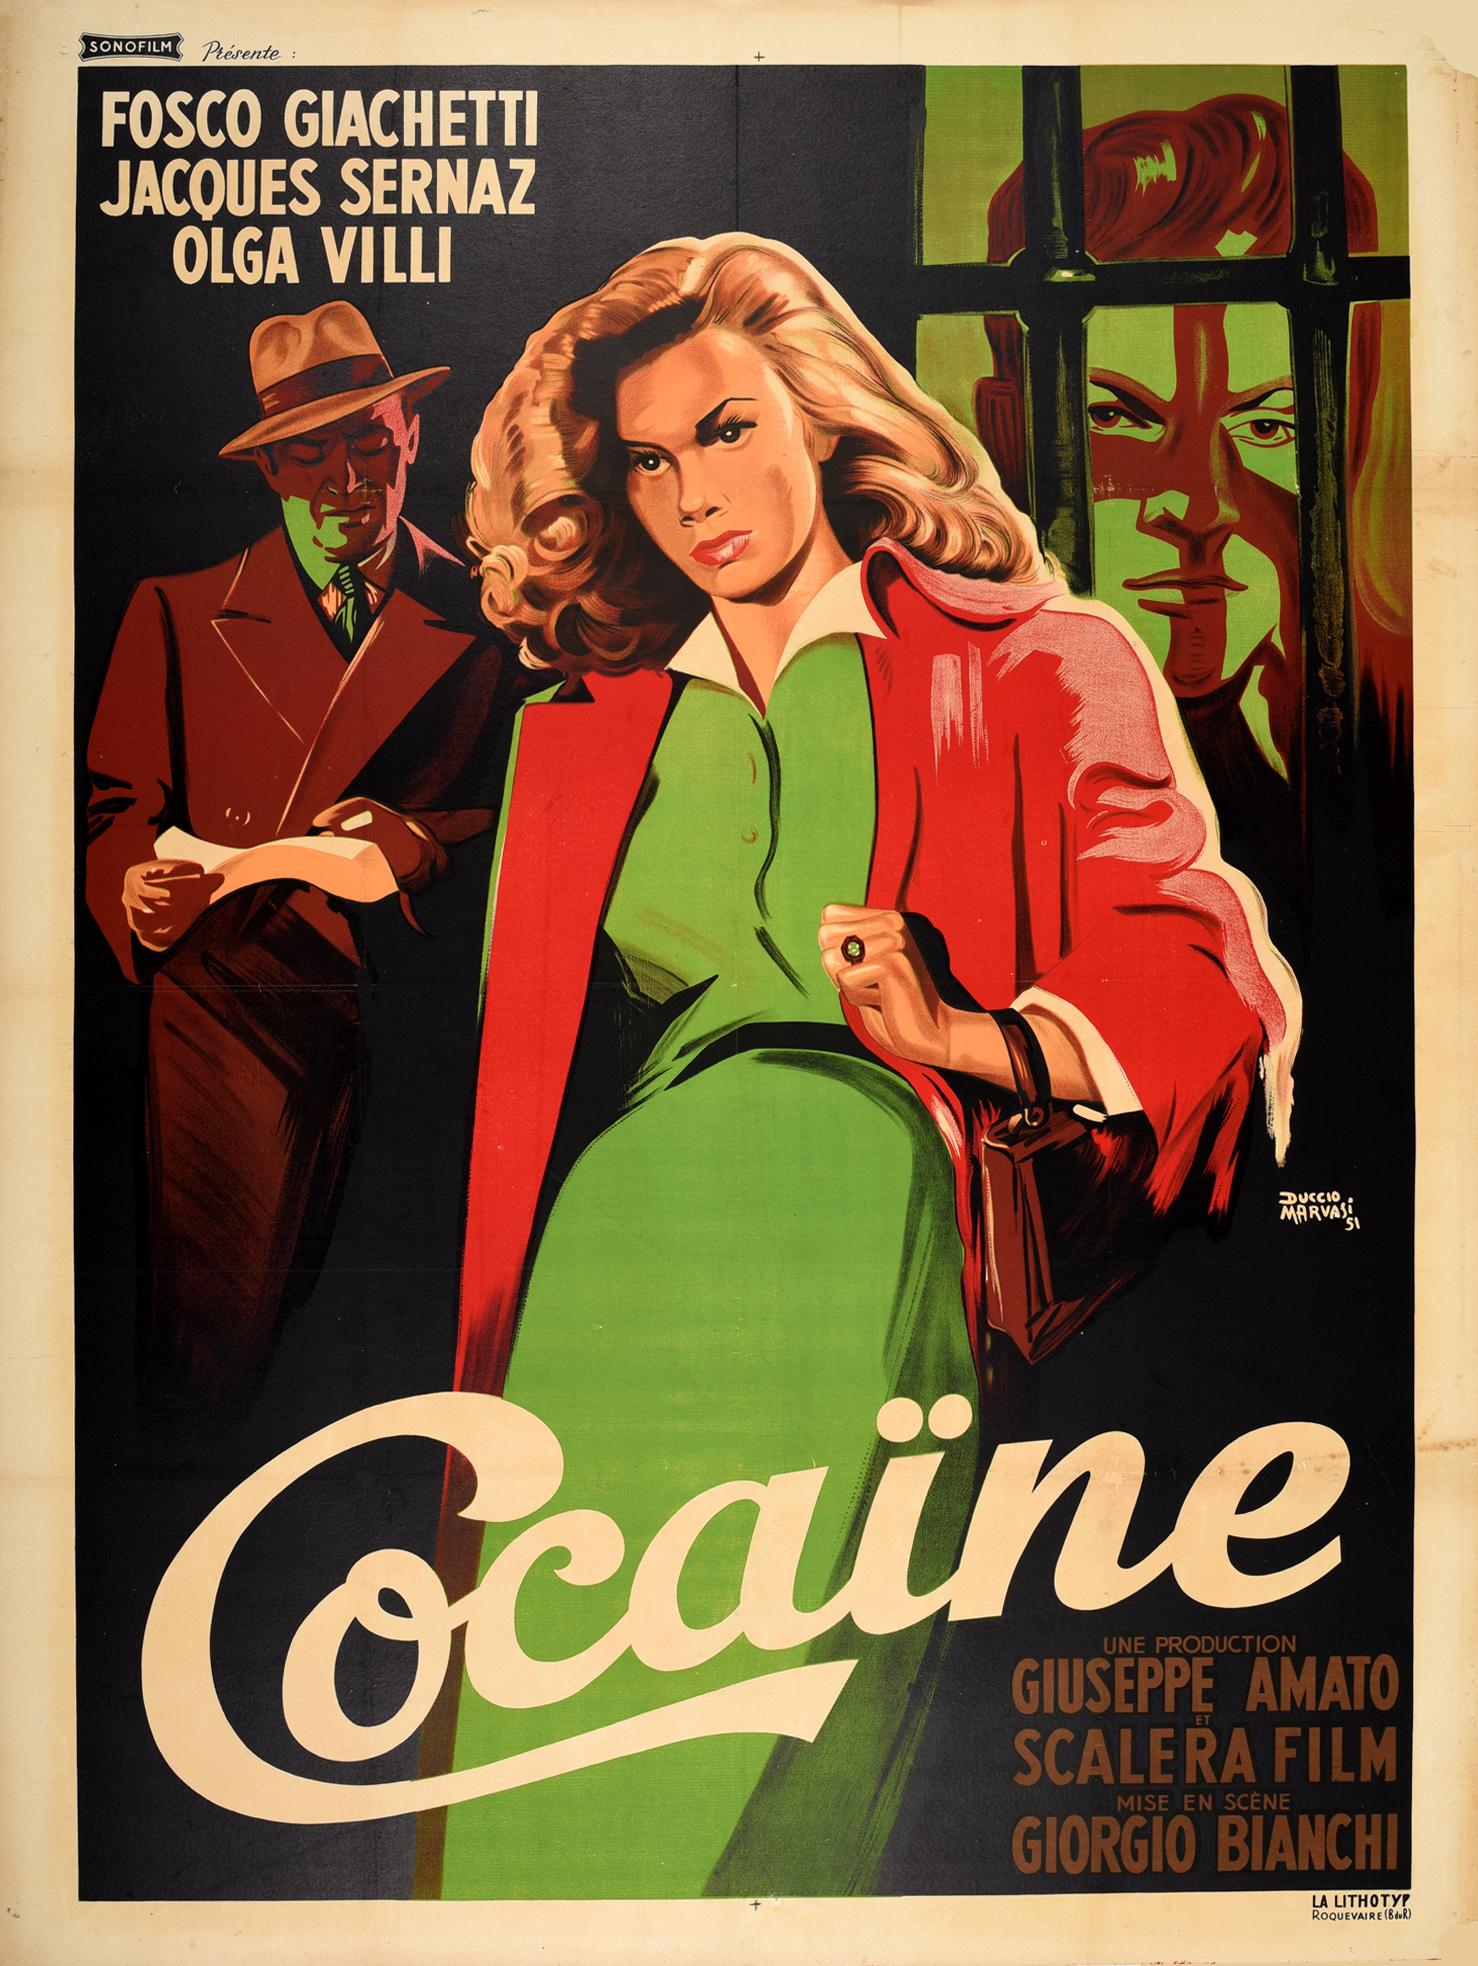 Duccio Marvasi Print - Original Vintage Film Poster For Cocaine French Release Italian Drama Movie Art